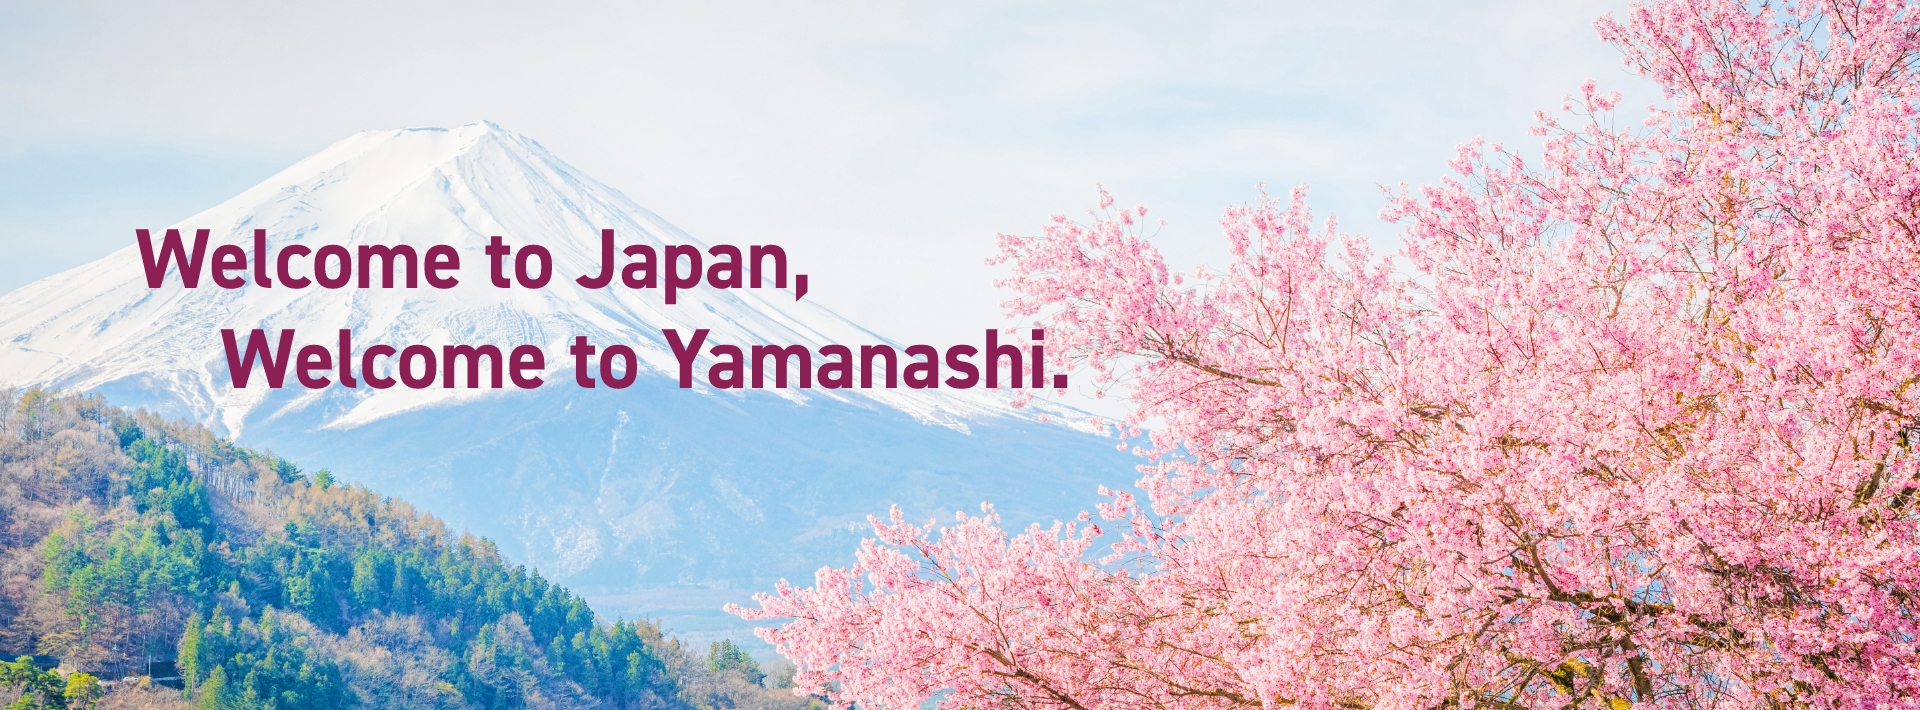 Welcome to Japan, Welcome to Yamanashi.